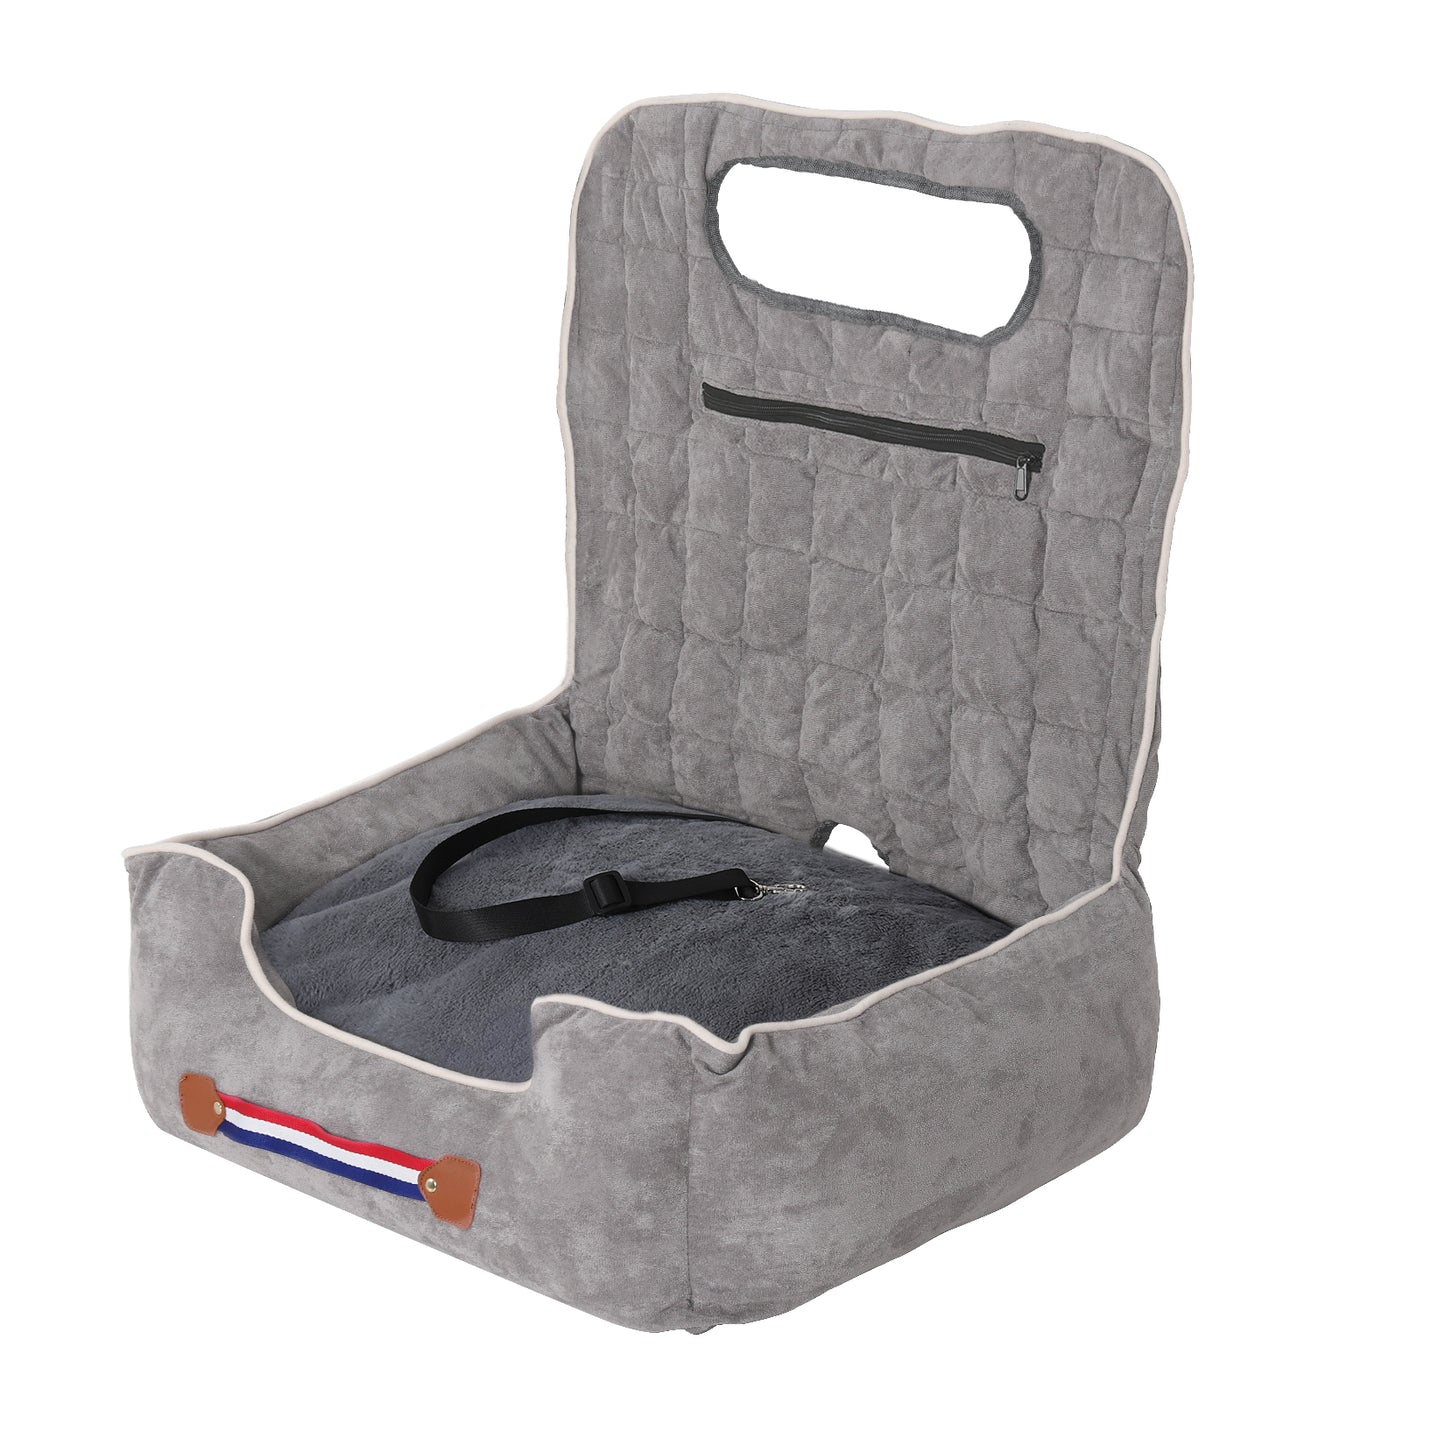 Soft Dog Car Seat Safe Anti-Slip Travel Portable Dog Booster with Pockets